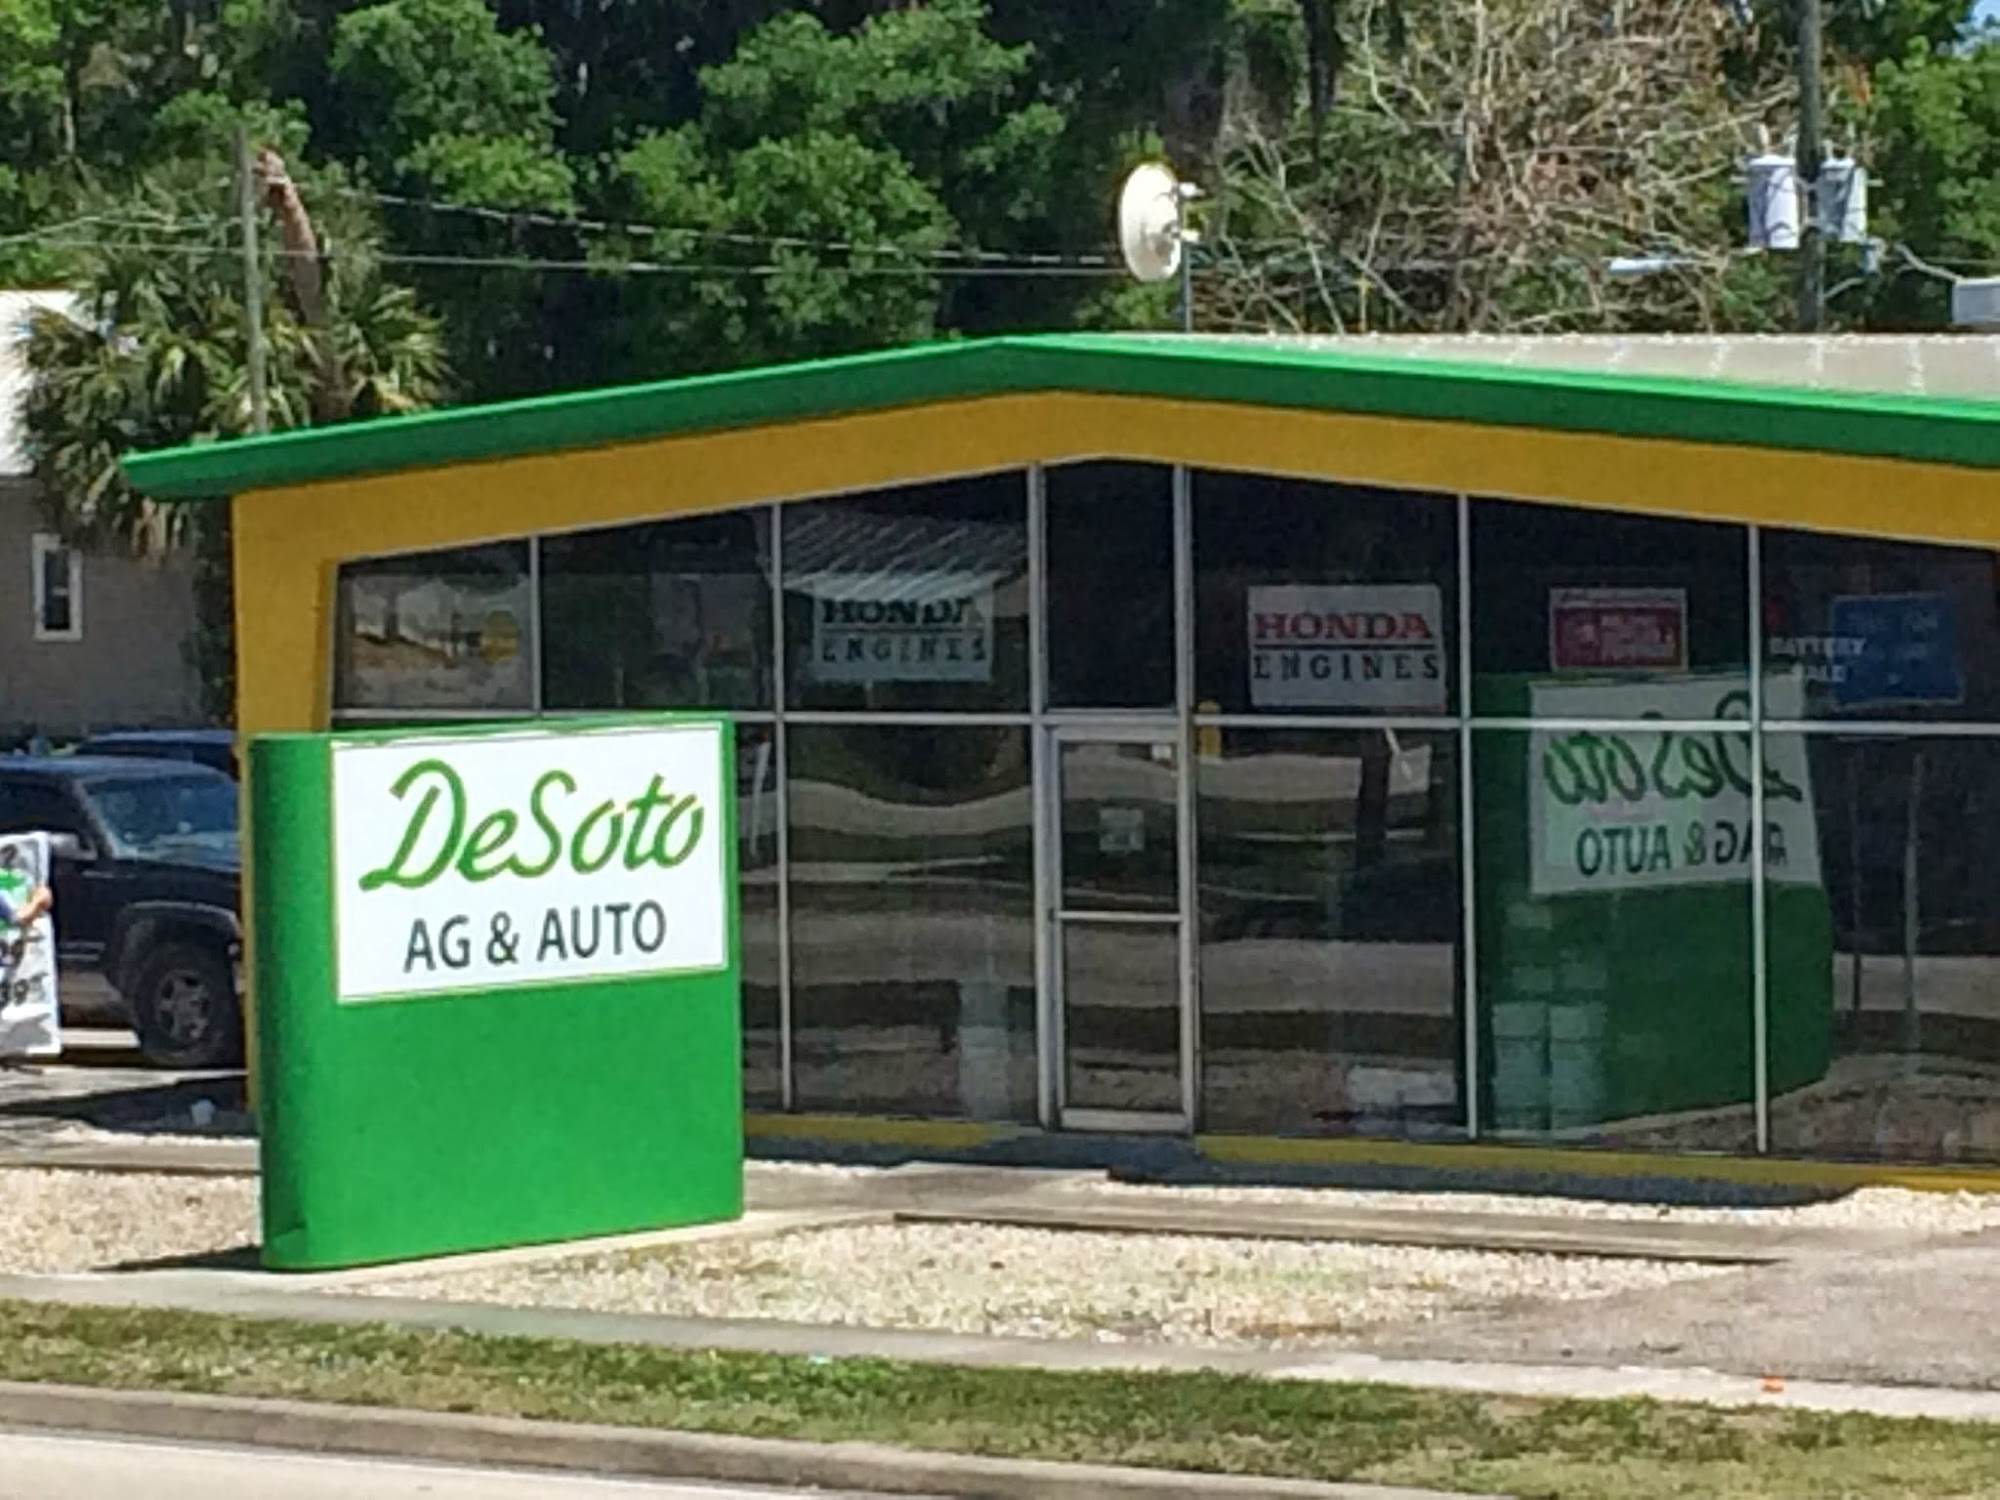 DeSoto Ag & Auto